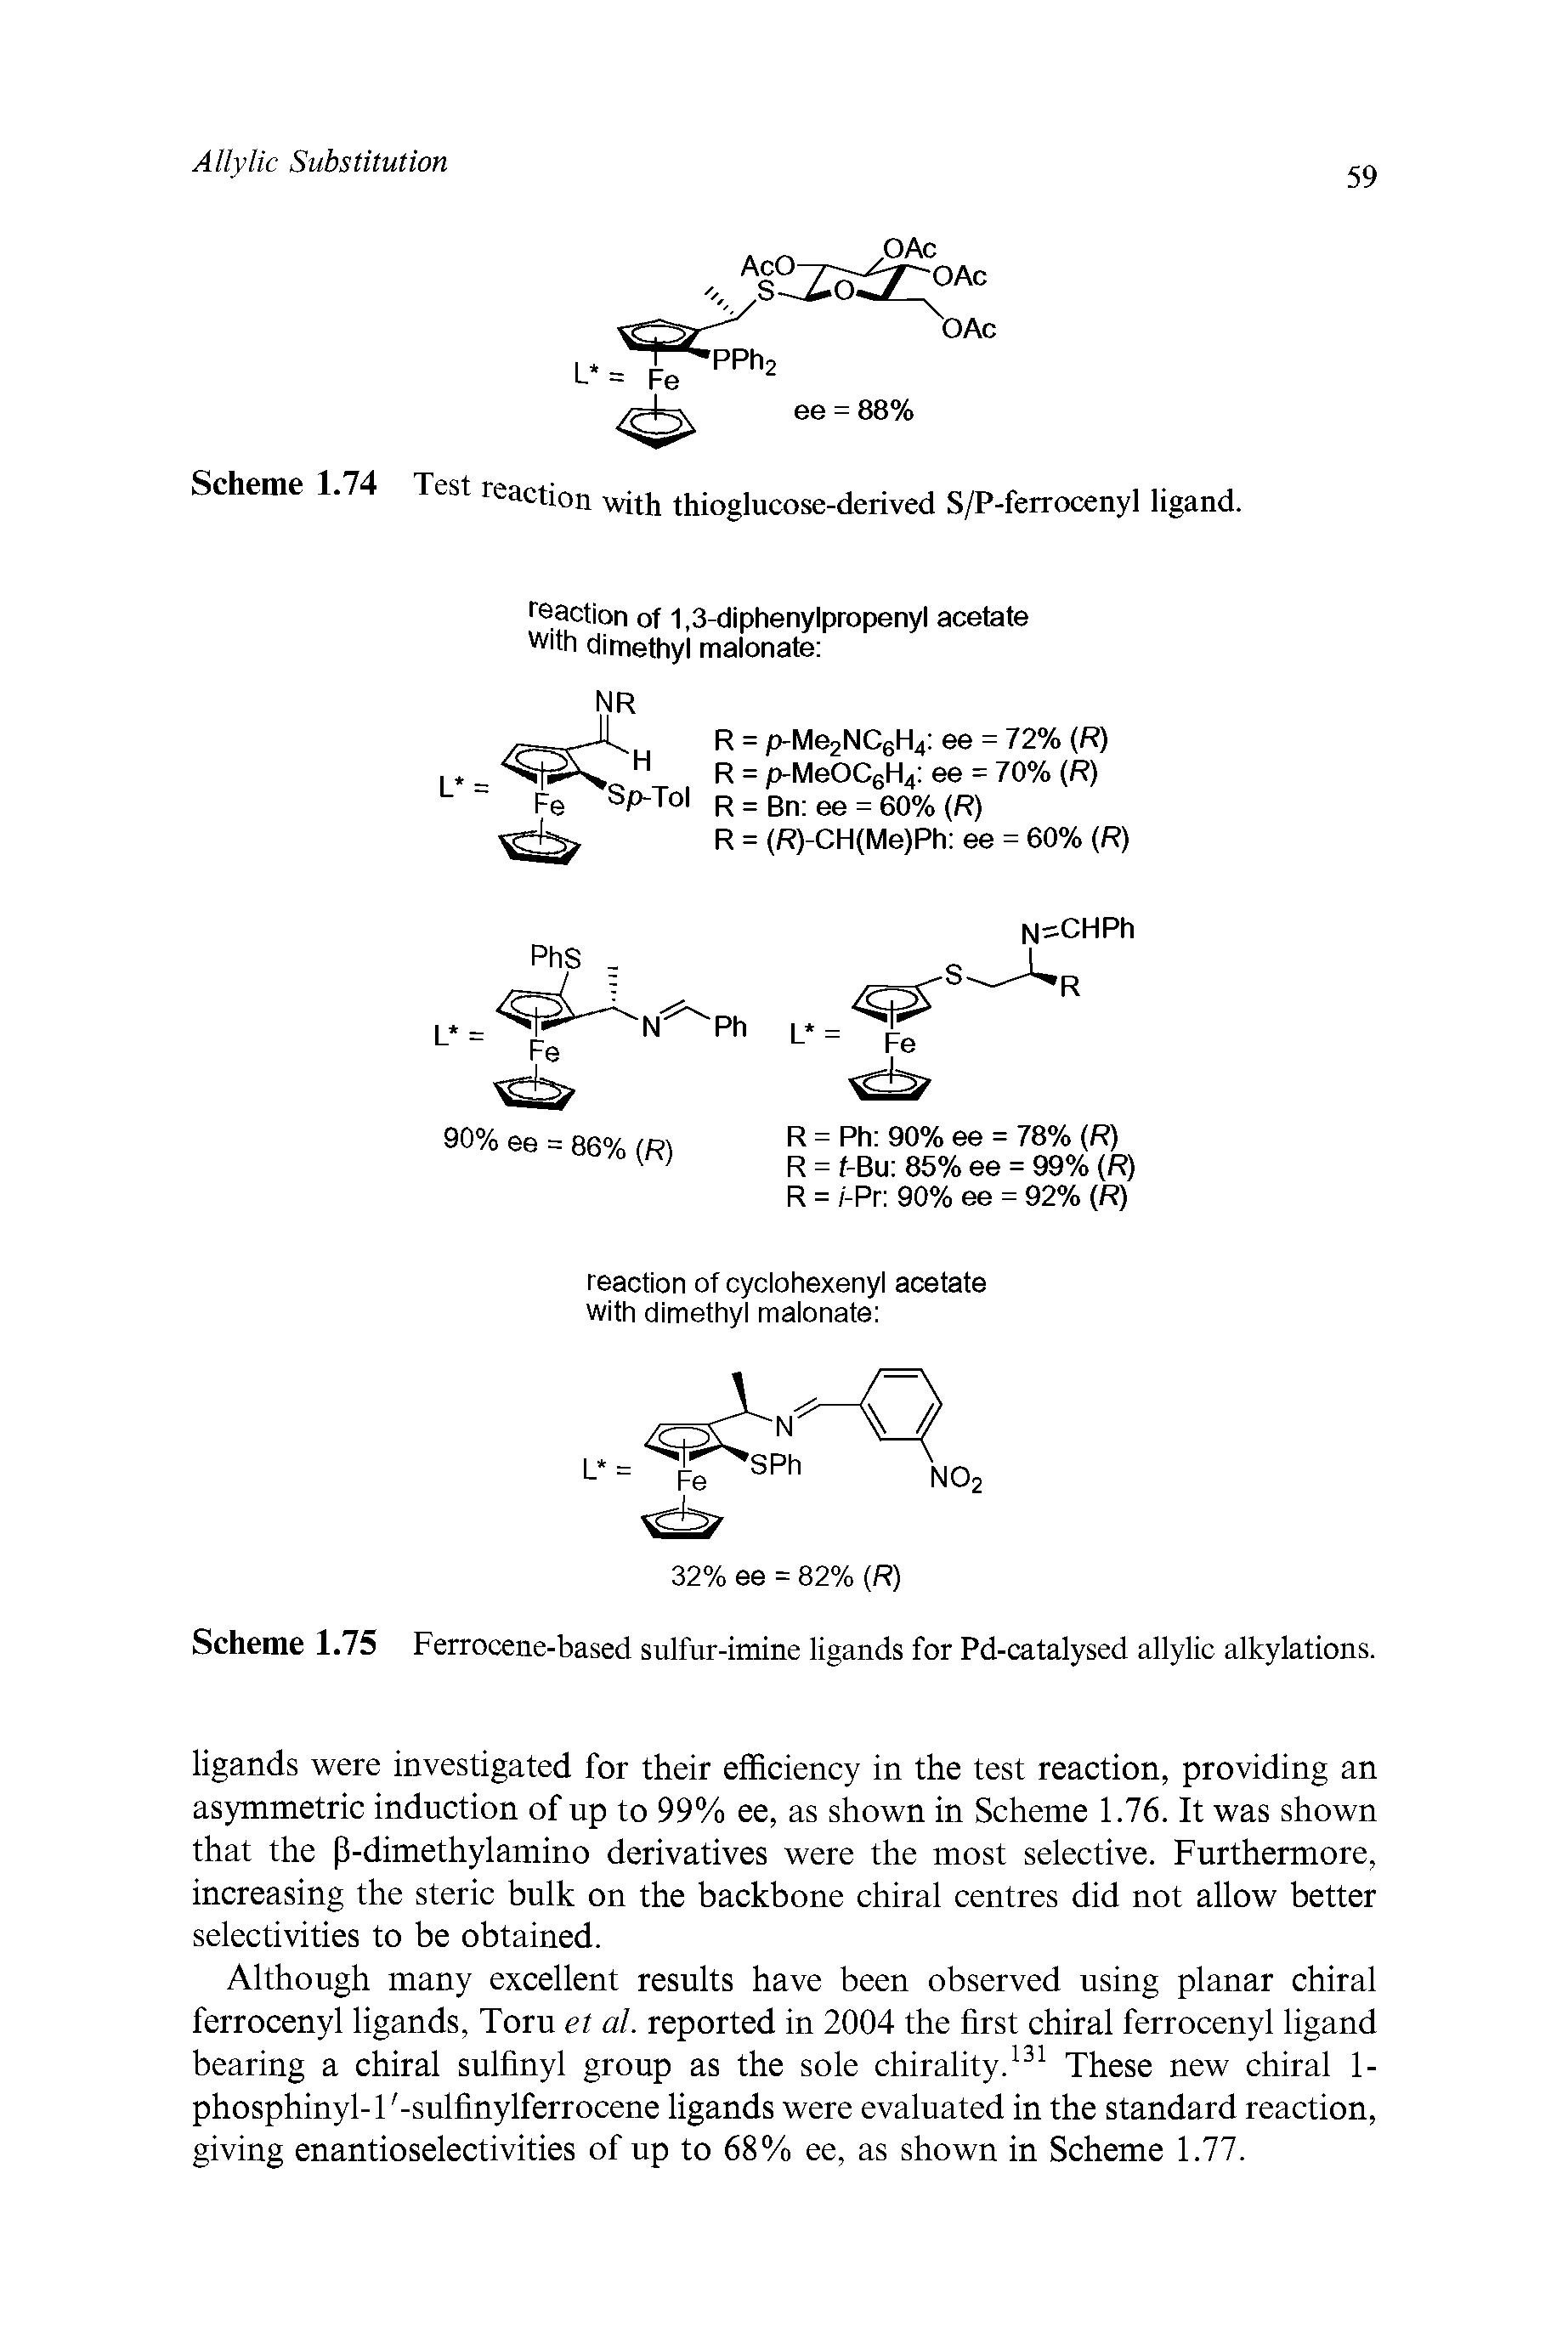 Scheme 1.75 Ferrocene-based sulfur-imine ligands for Pd-catalysed allylic alkylations.